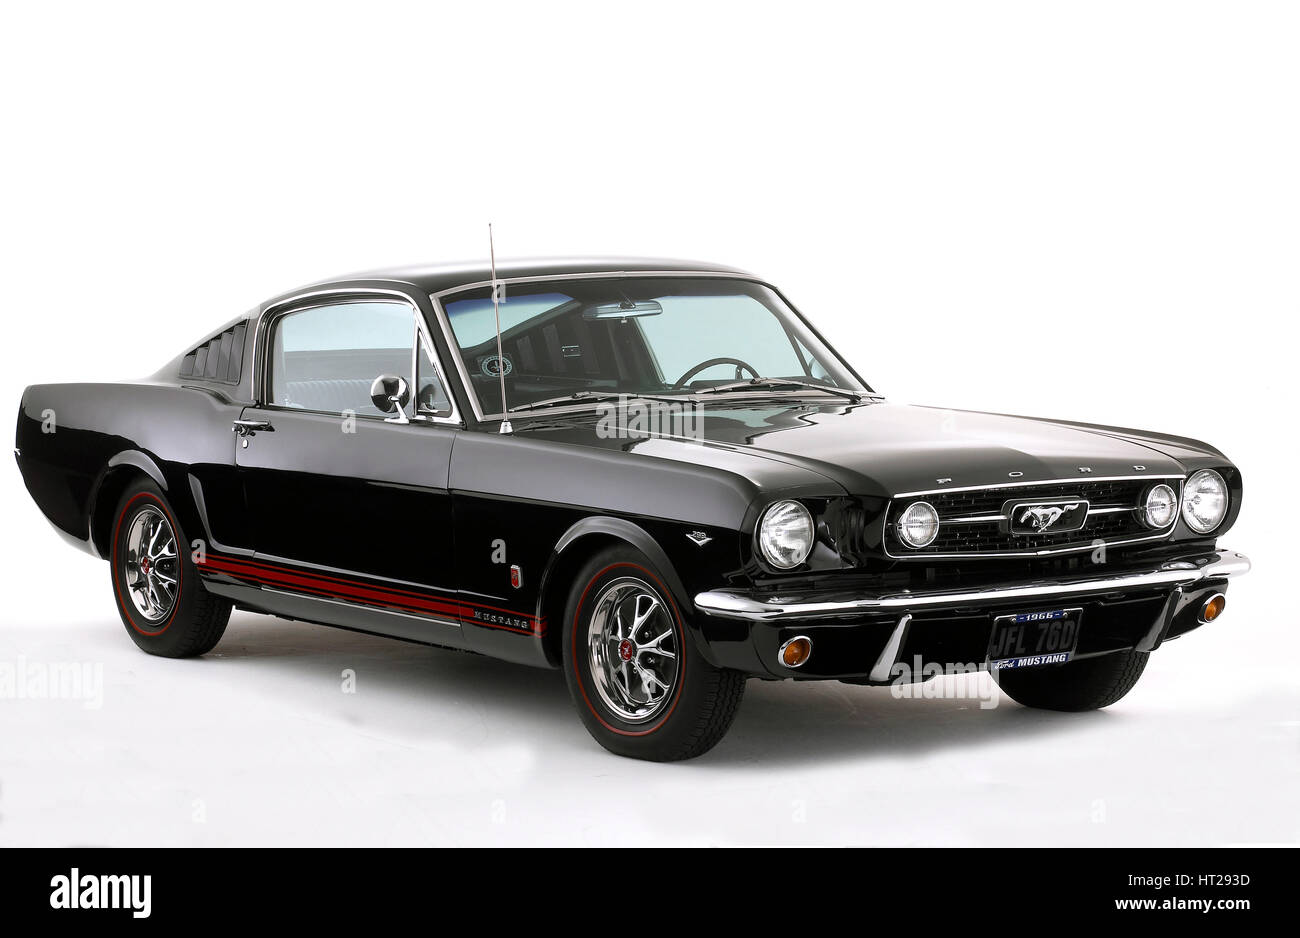 1966 ford Mustang 289 gt Artist: unbekannt. Stockfoto